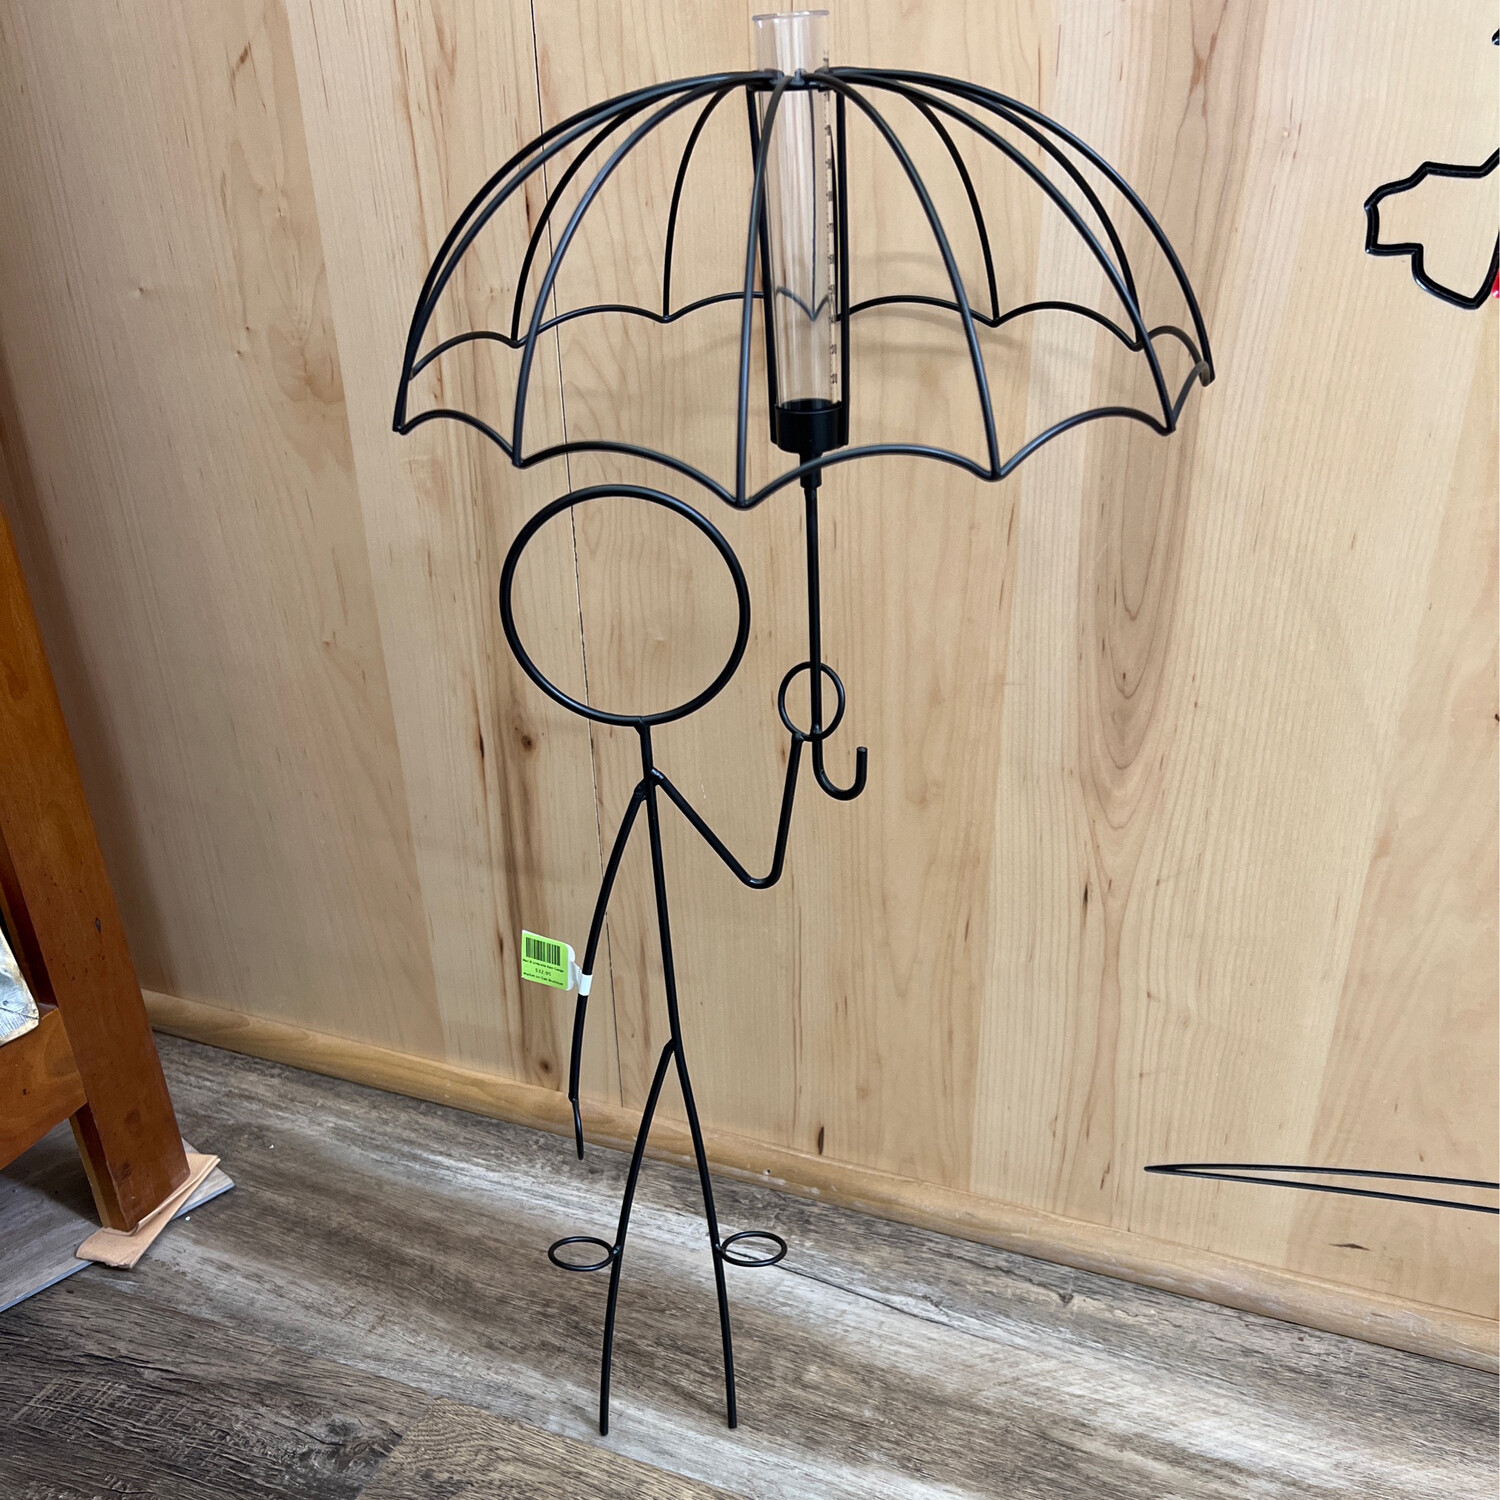 Man & Umbrella Rain Gauge